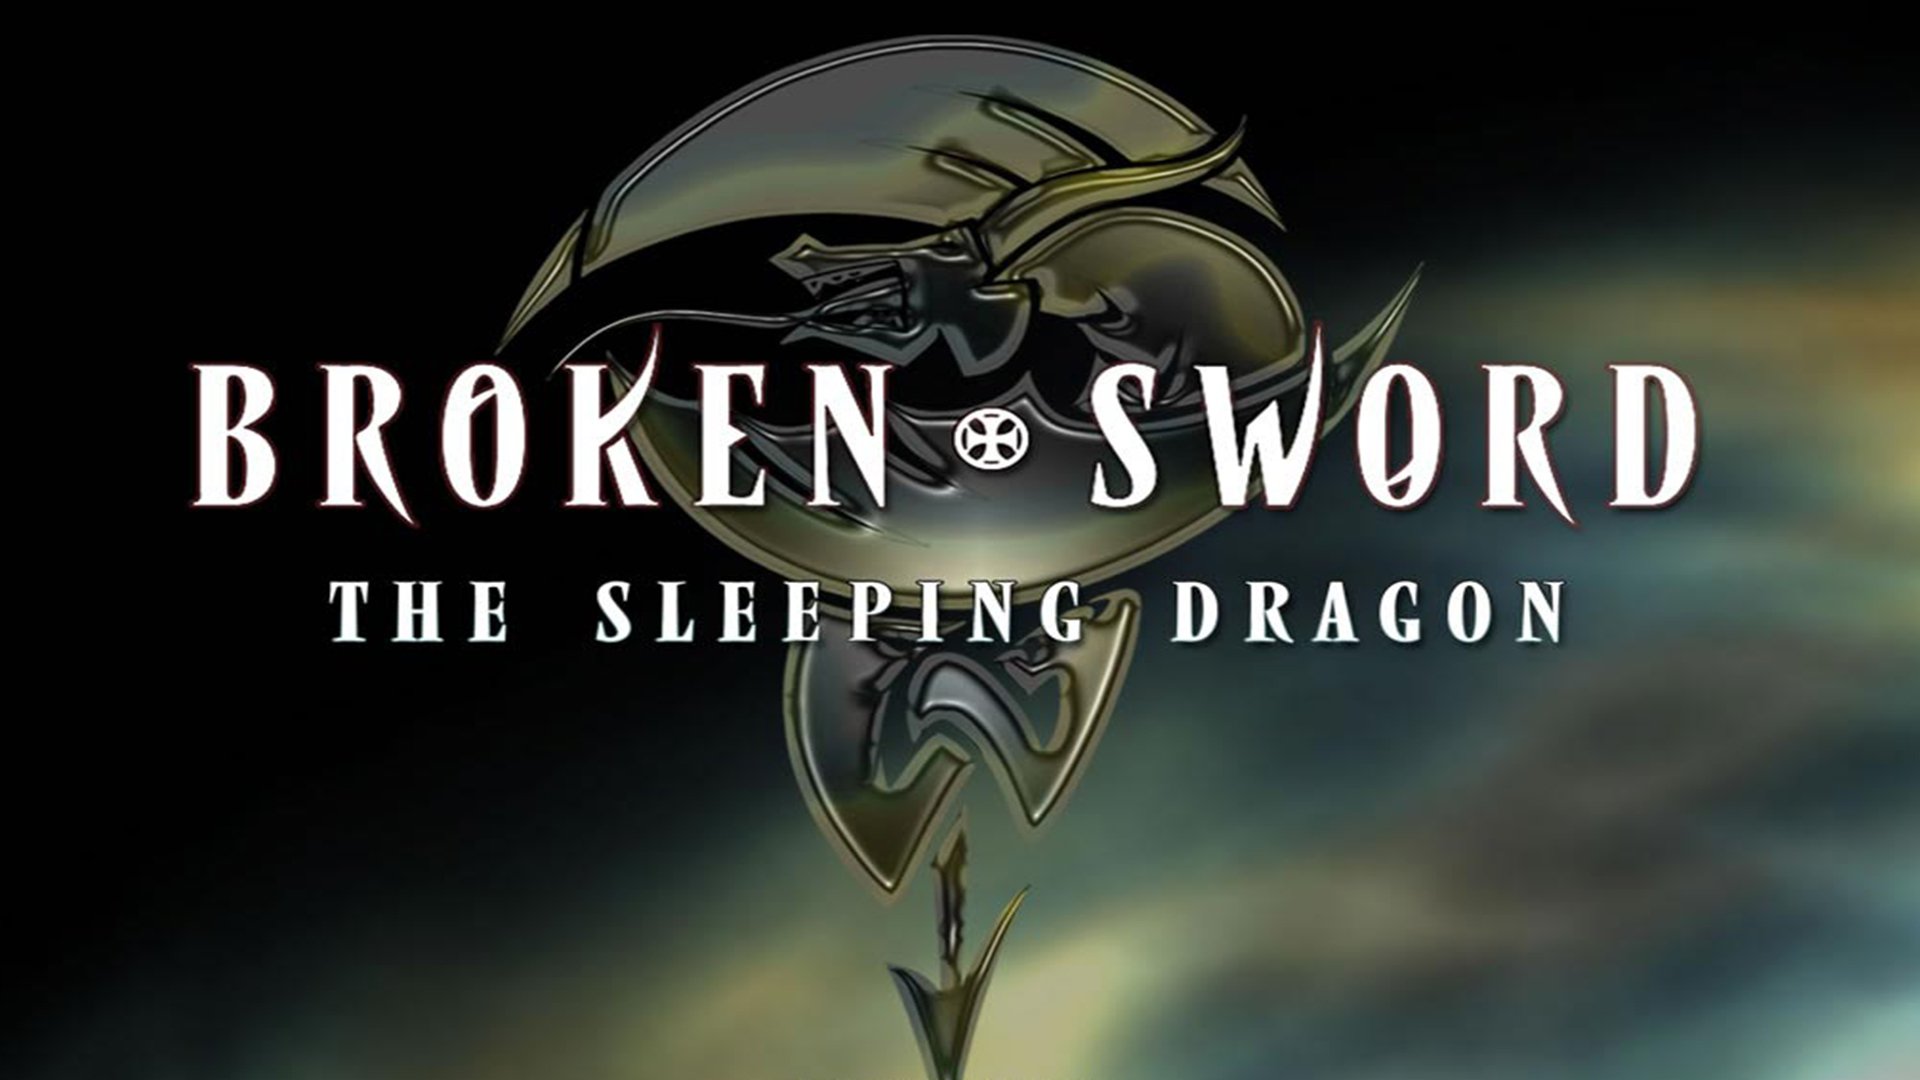 Broken Sword The Sleeping Dragon HD Wallpaper And Background